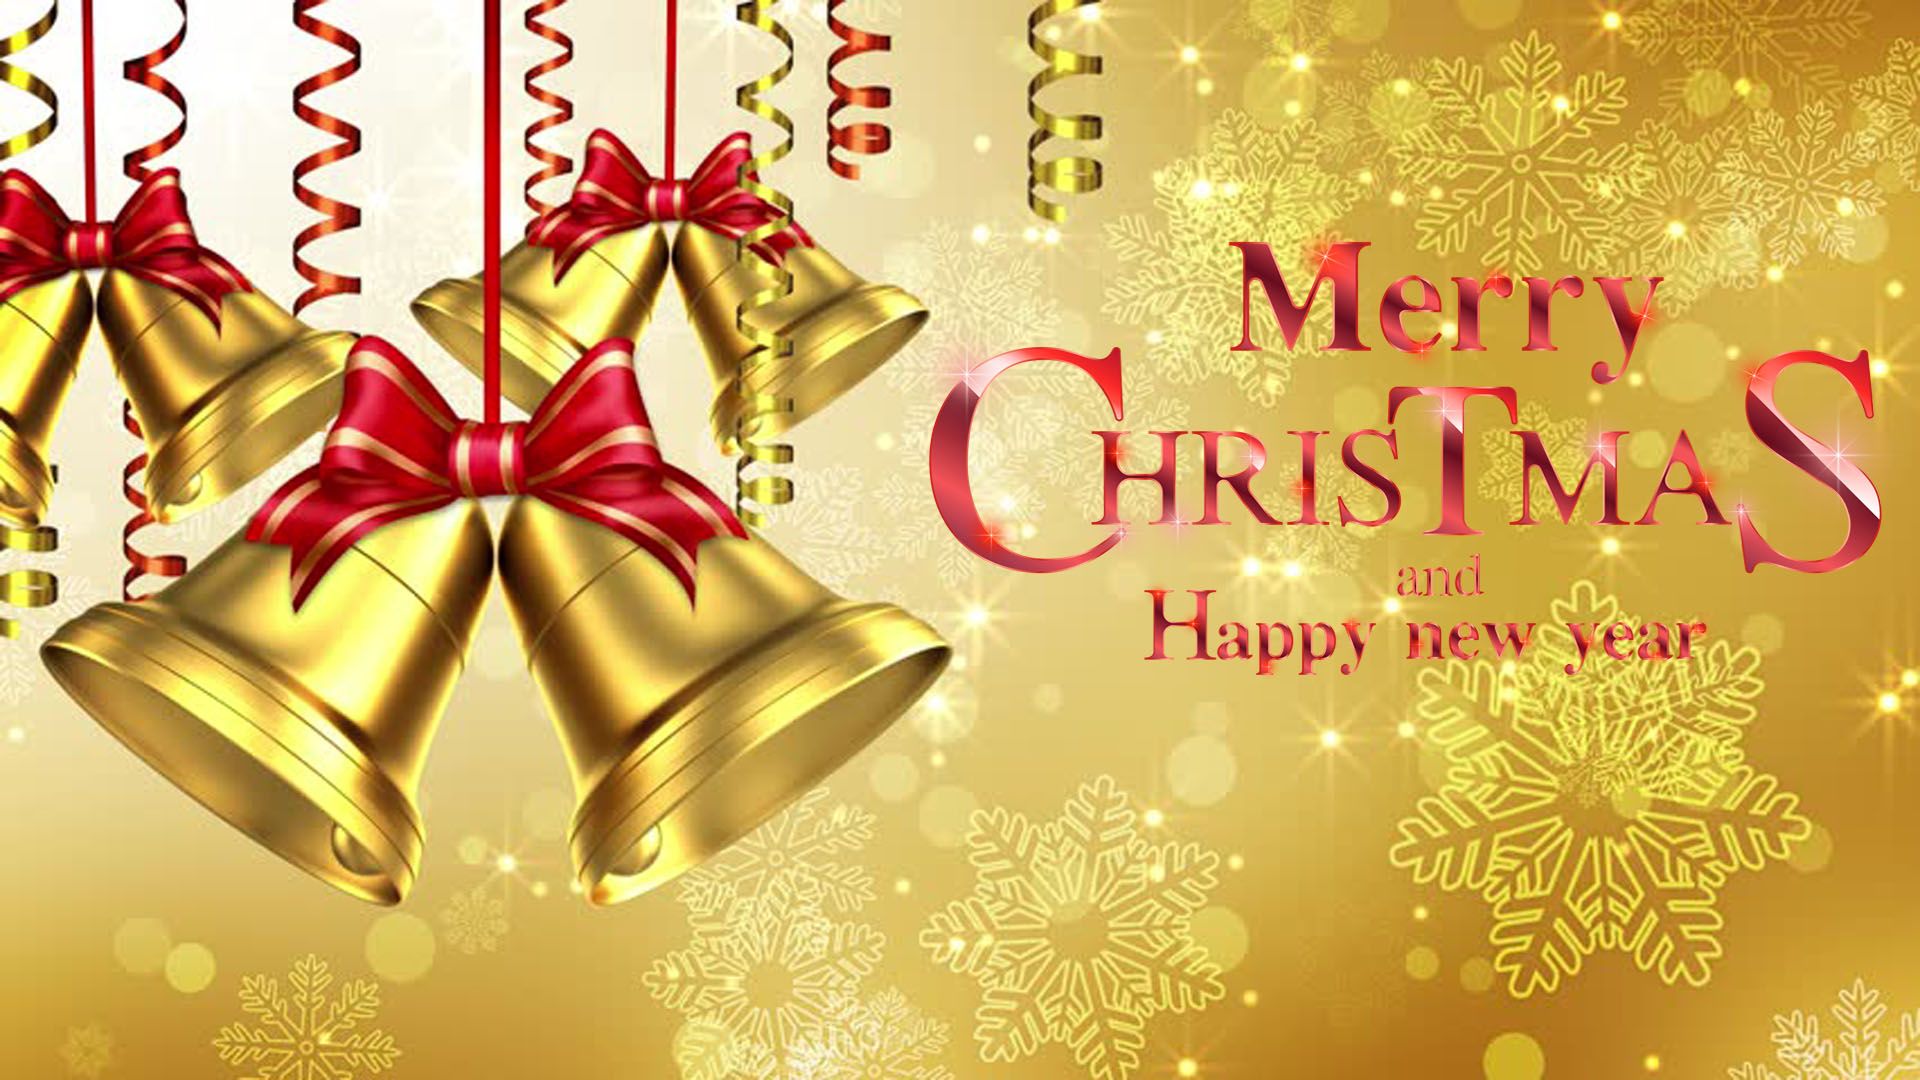 Happy New Year 2021 Jingle Bells Christmas Greeting card and Wallpaper, Wallpaper13.com